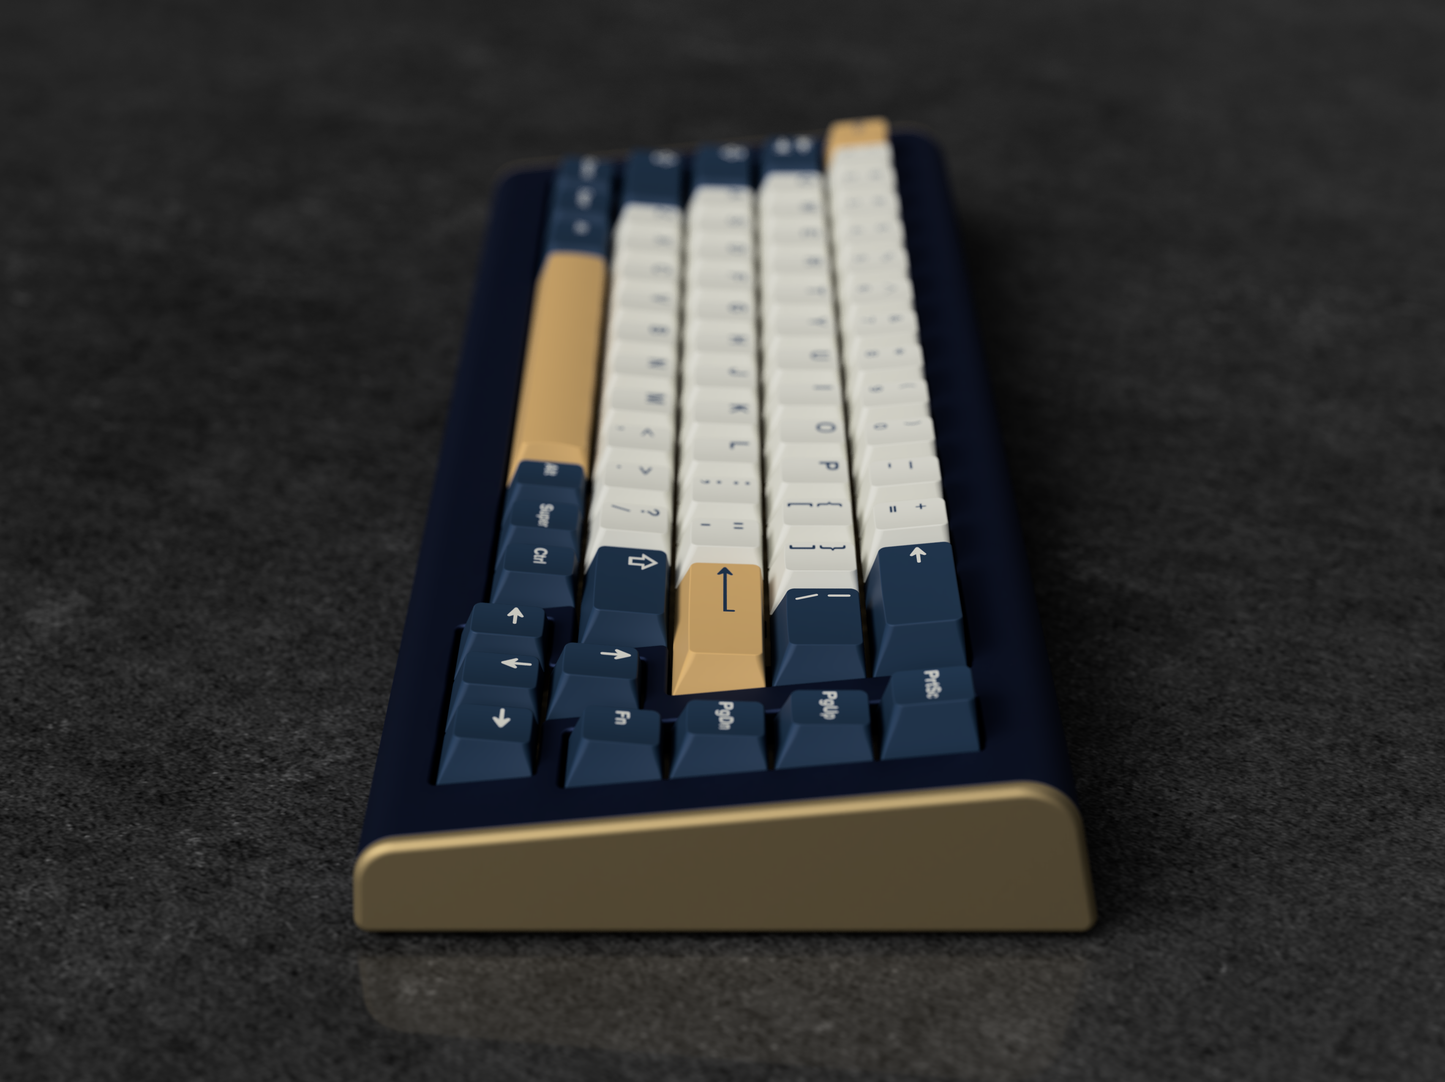 
                  
                    (Group Buy) Gentoo Keyboard Kit
                  
                